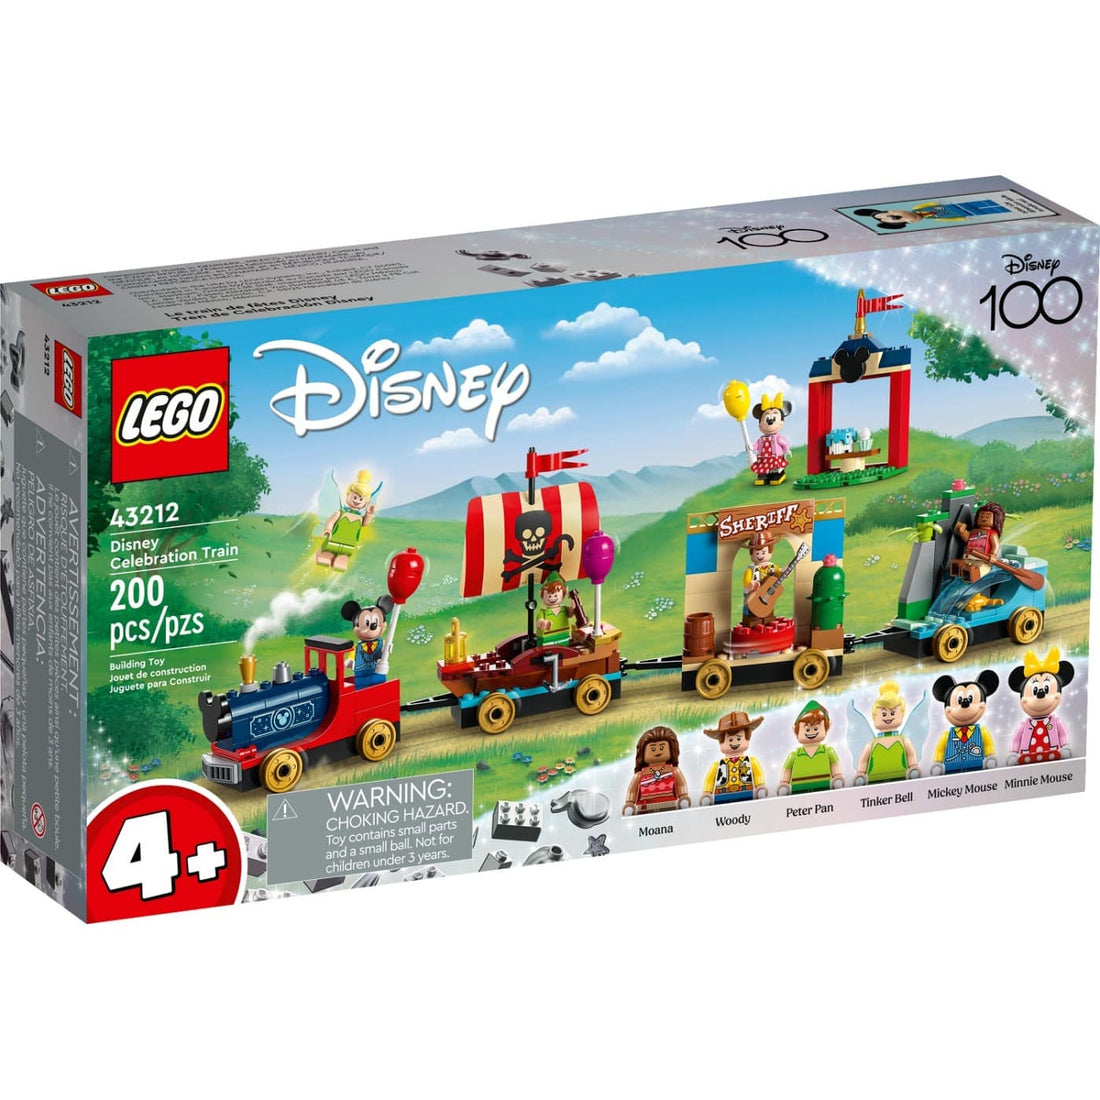 43212 Lego Disney Celebration Train